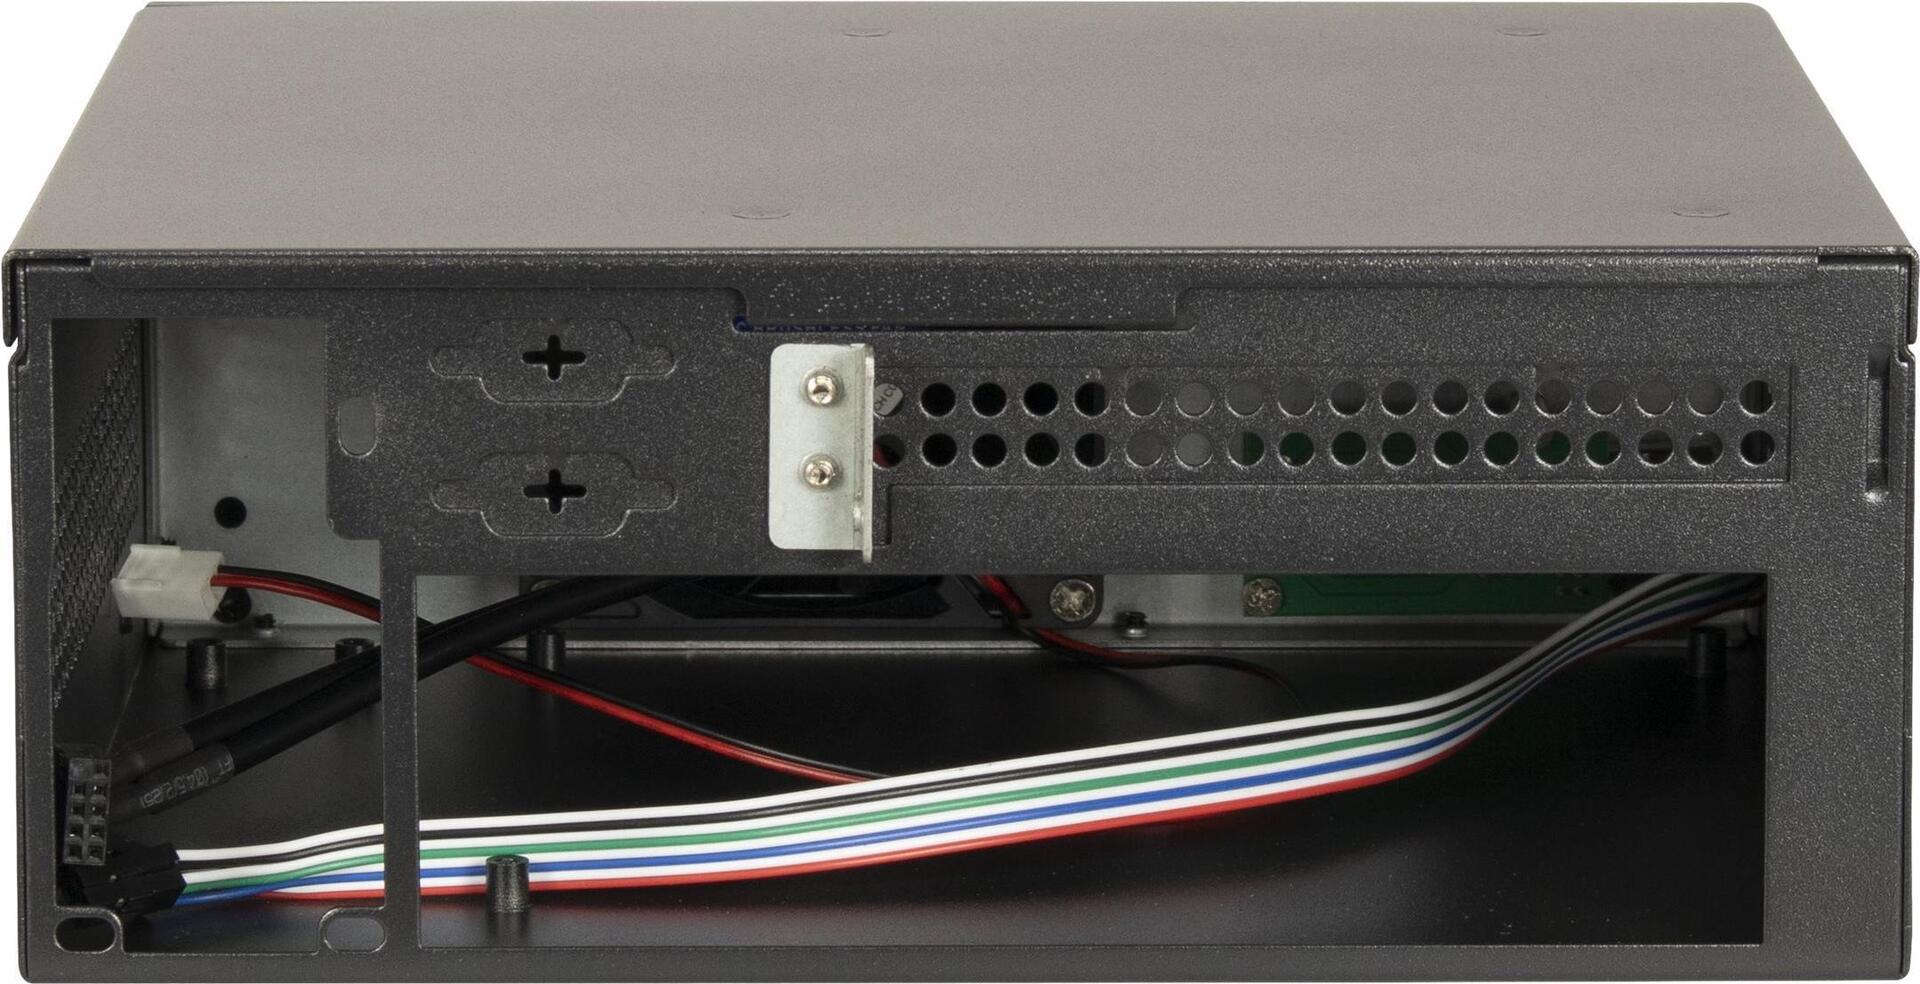 INTER-TECH IPC S21 - Gehaeuse für Mini-Serversysteme 2x USB 2.0 1x 80mm Luefter serienmaessig (88887315)